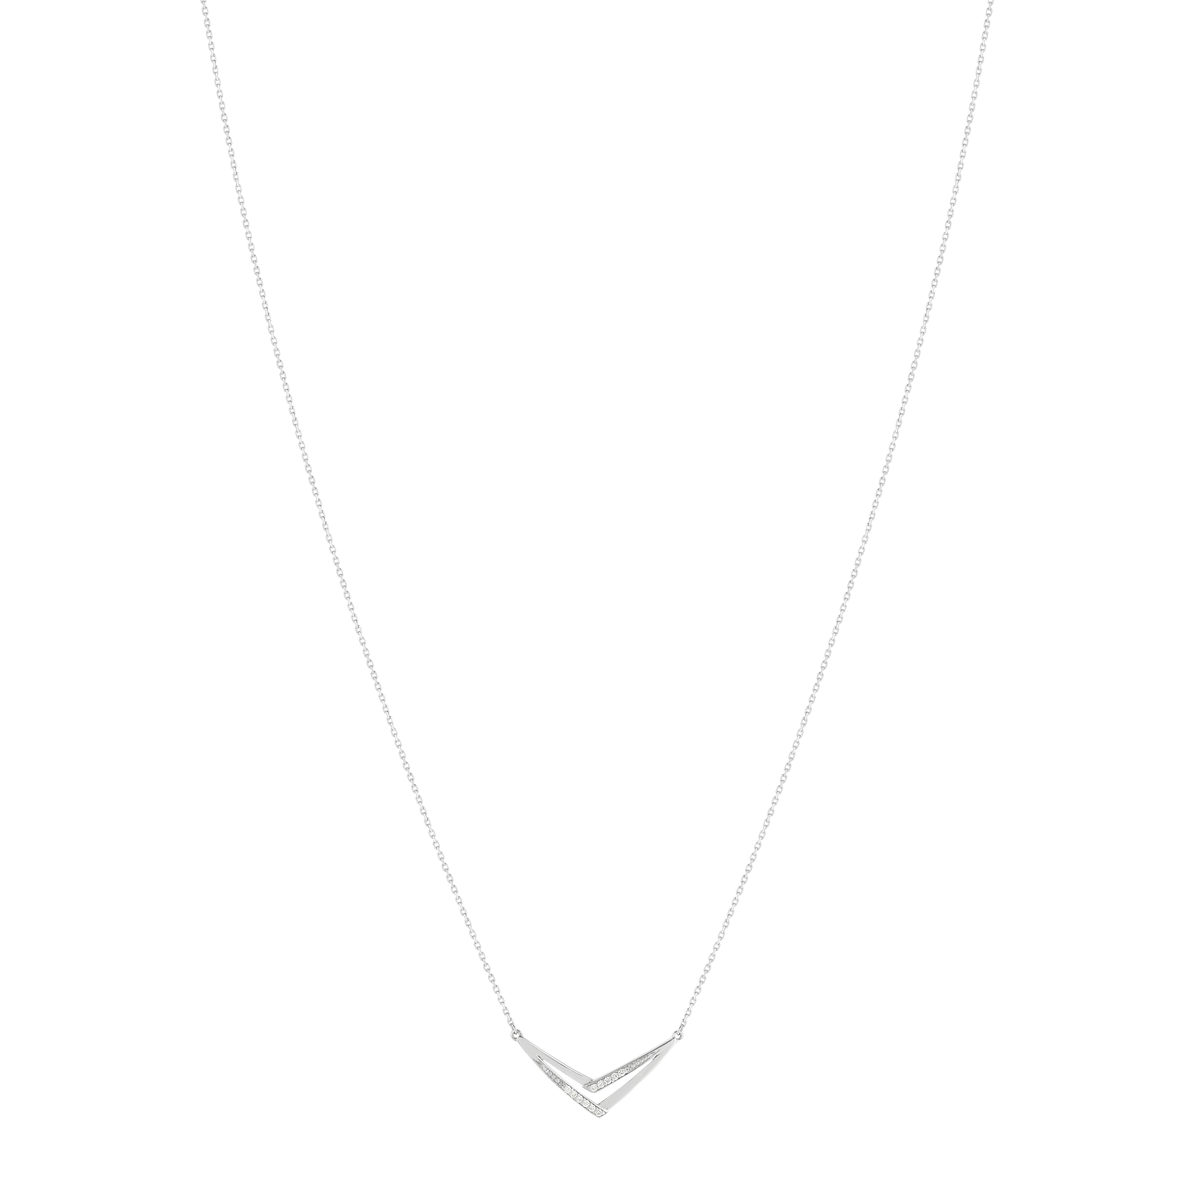 Collier or 375 blanc 'V' diamants 42 cm - vue 2